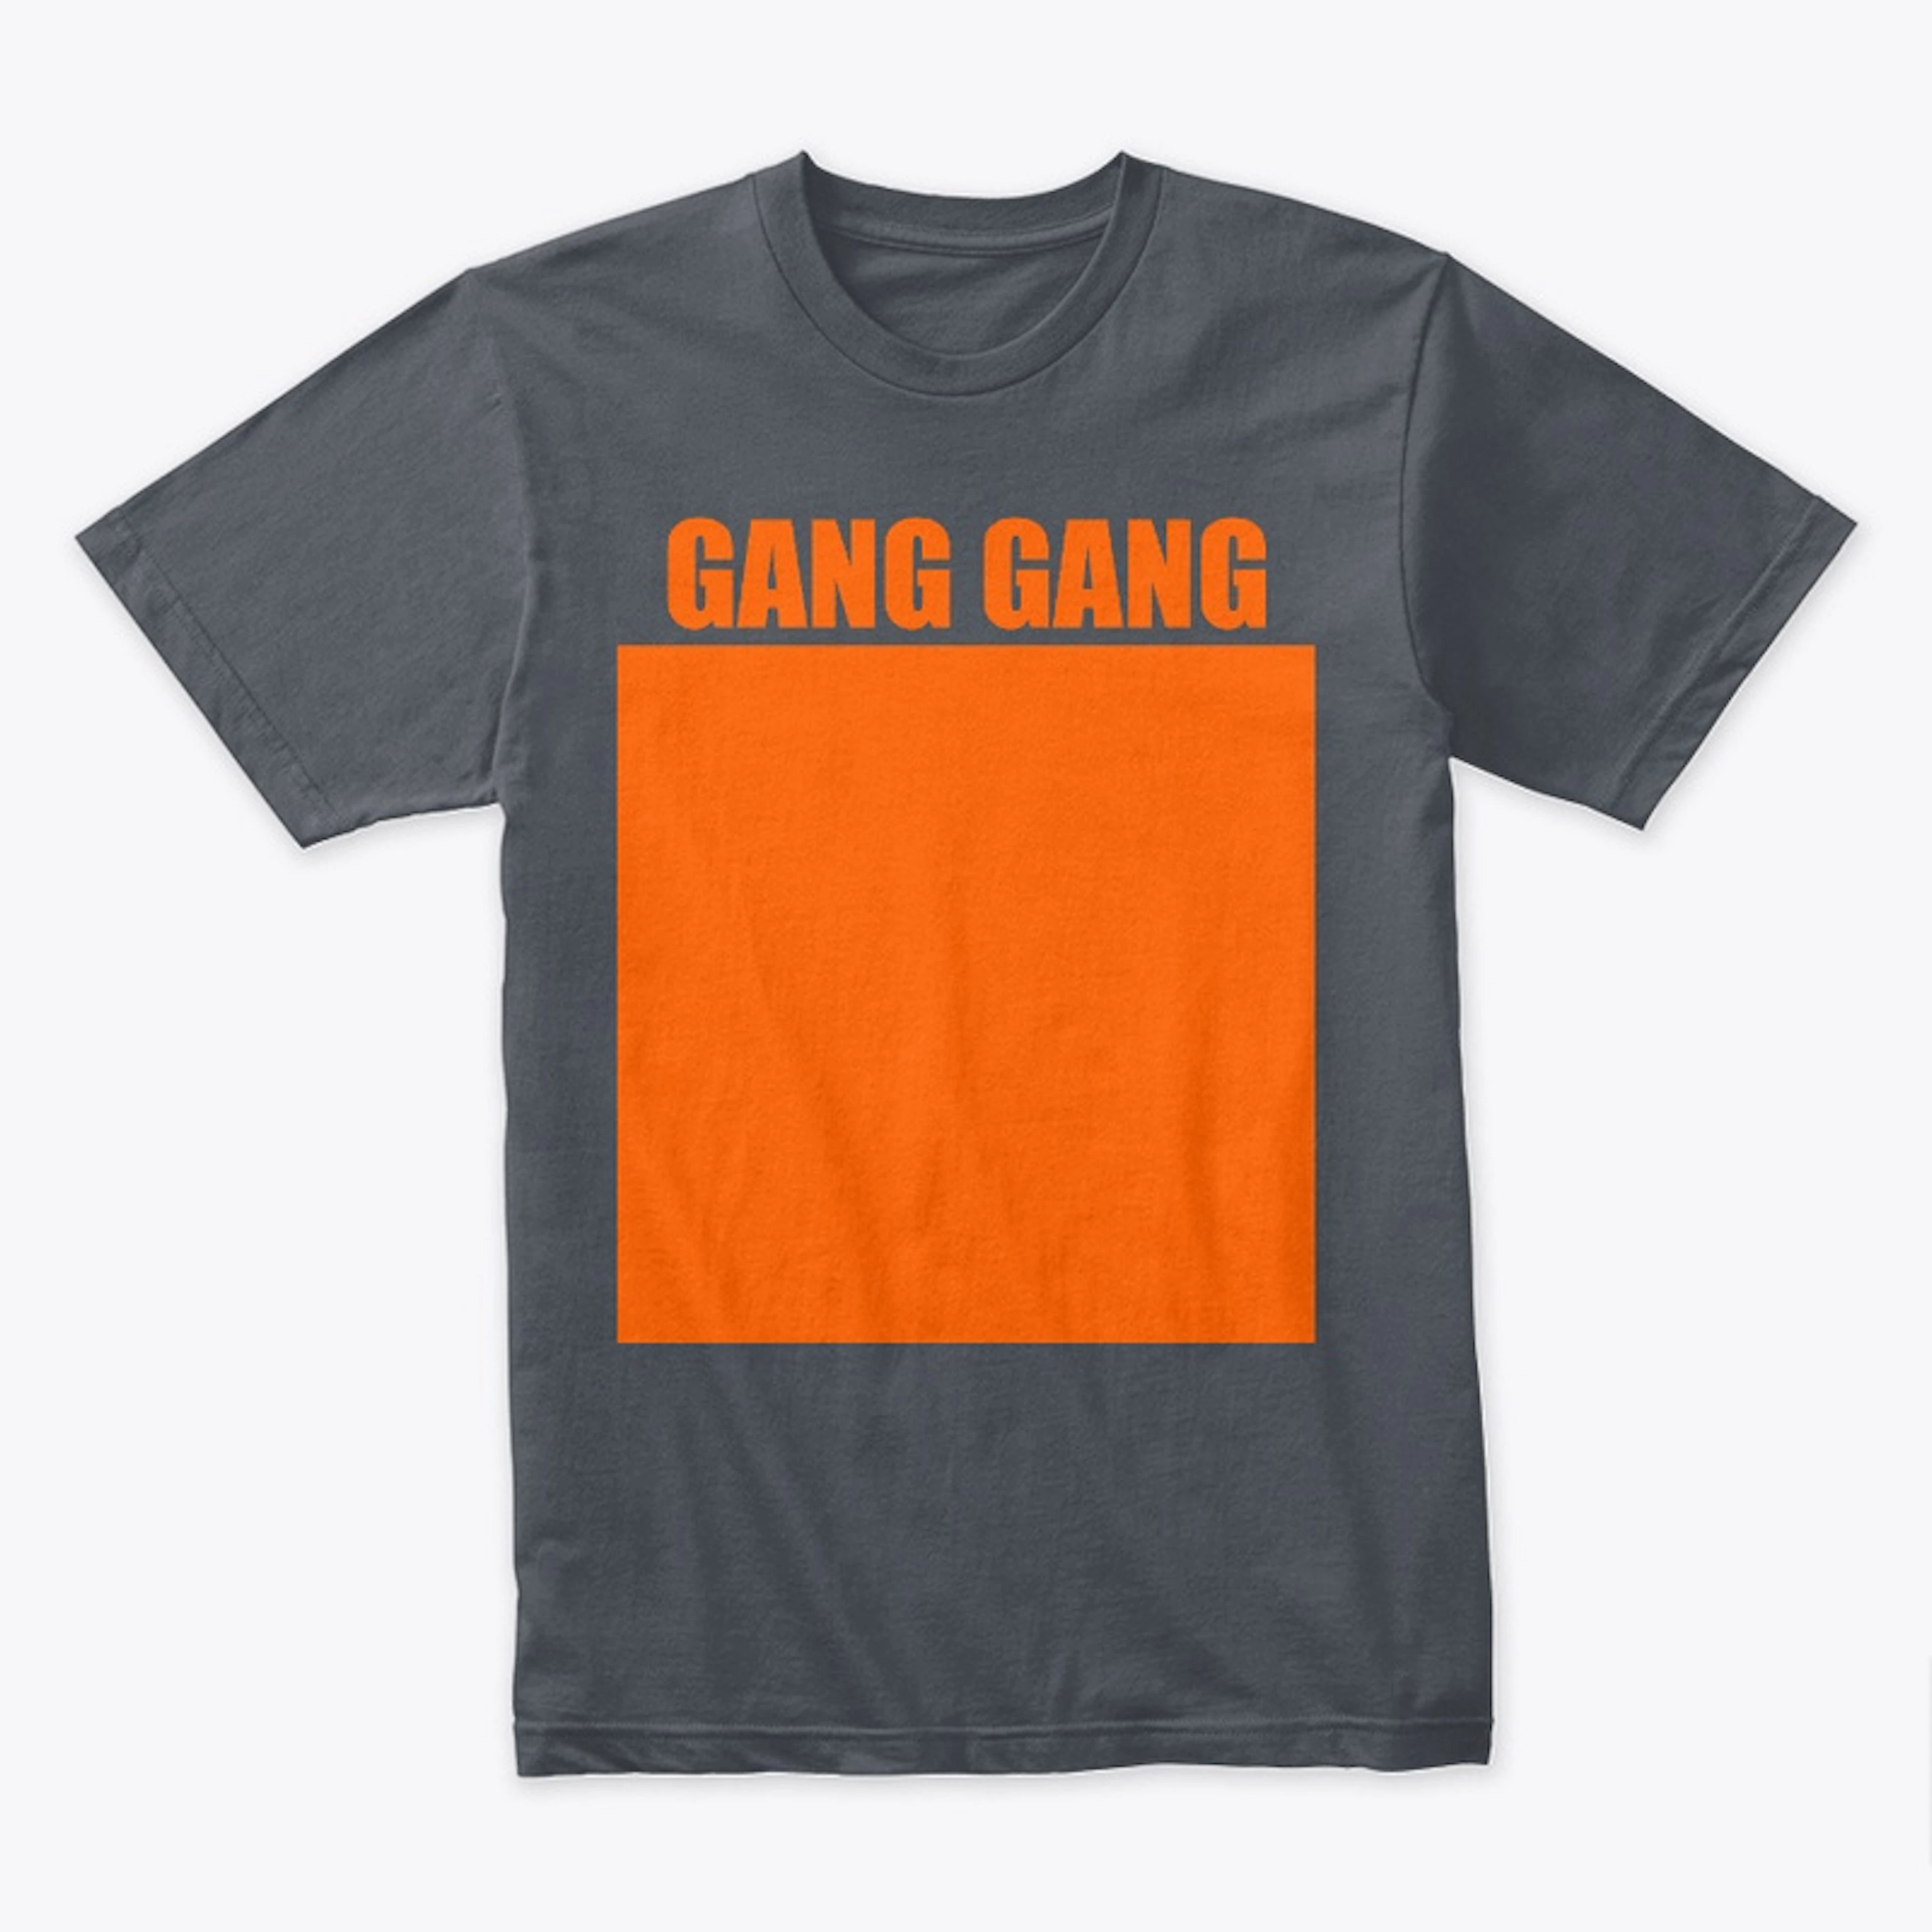 GANG GANG This is Orange